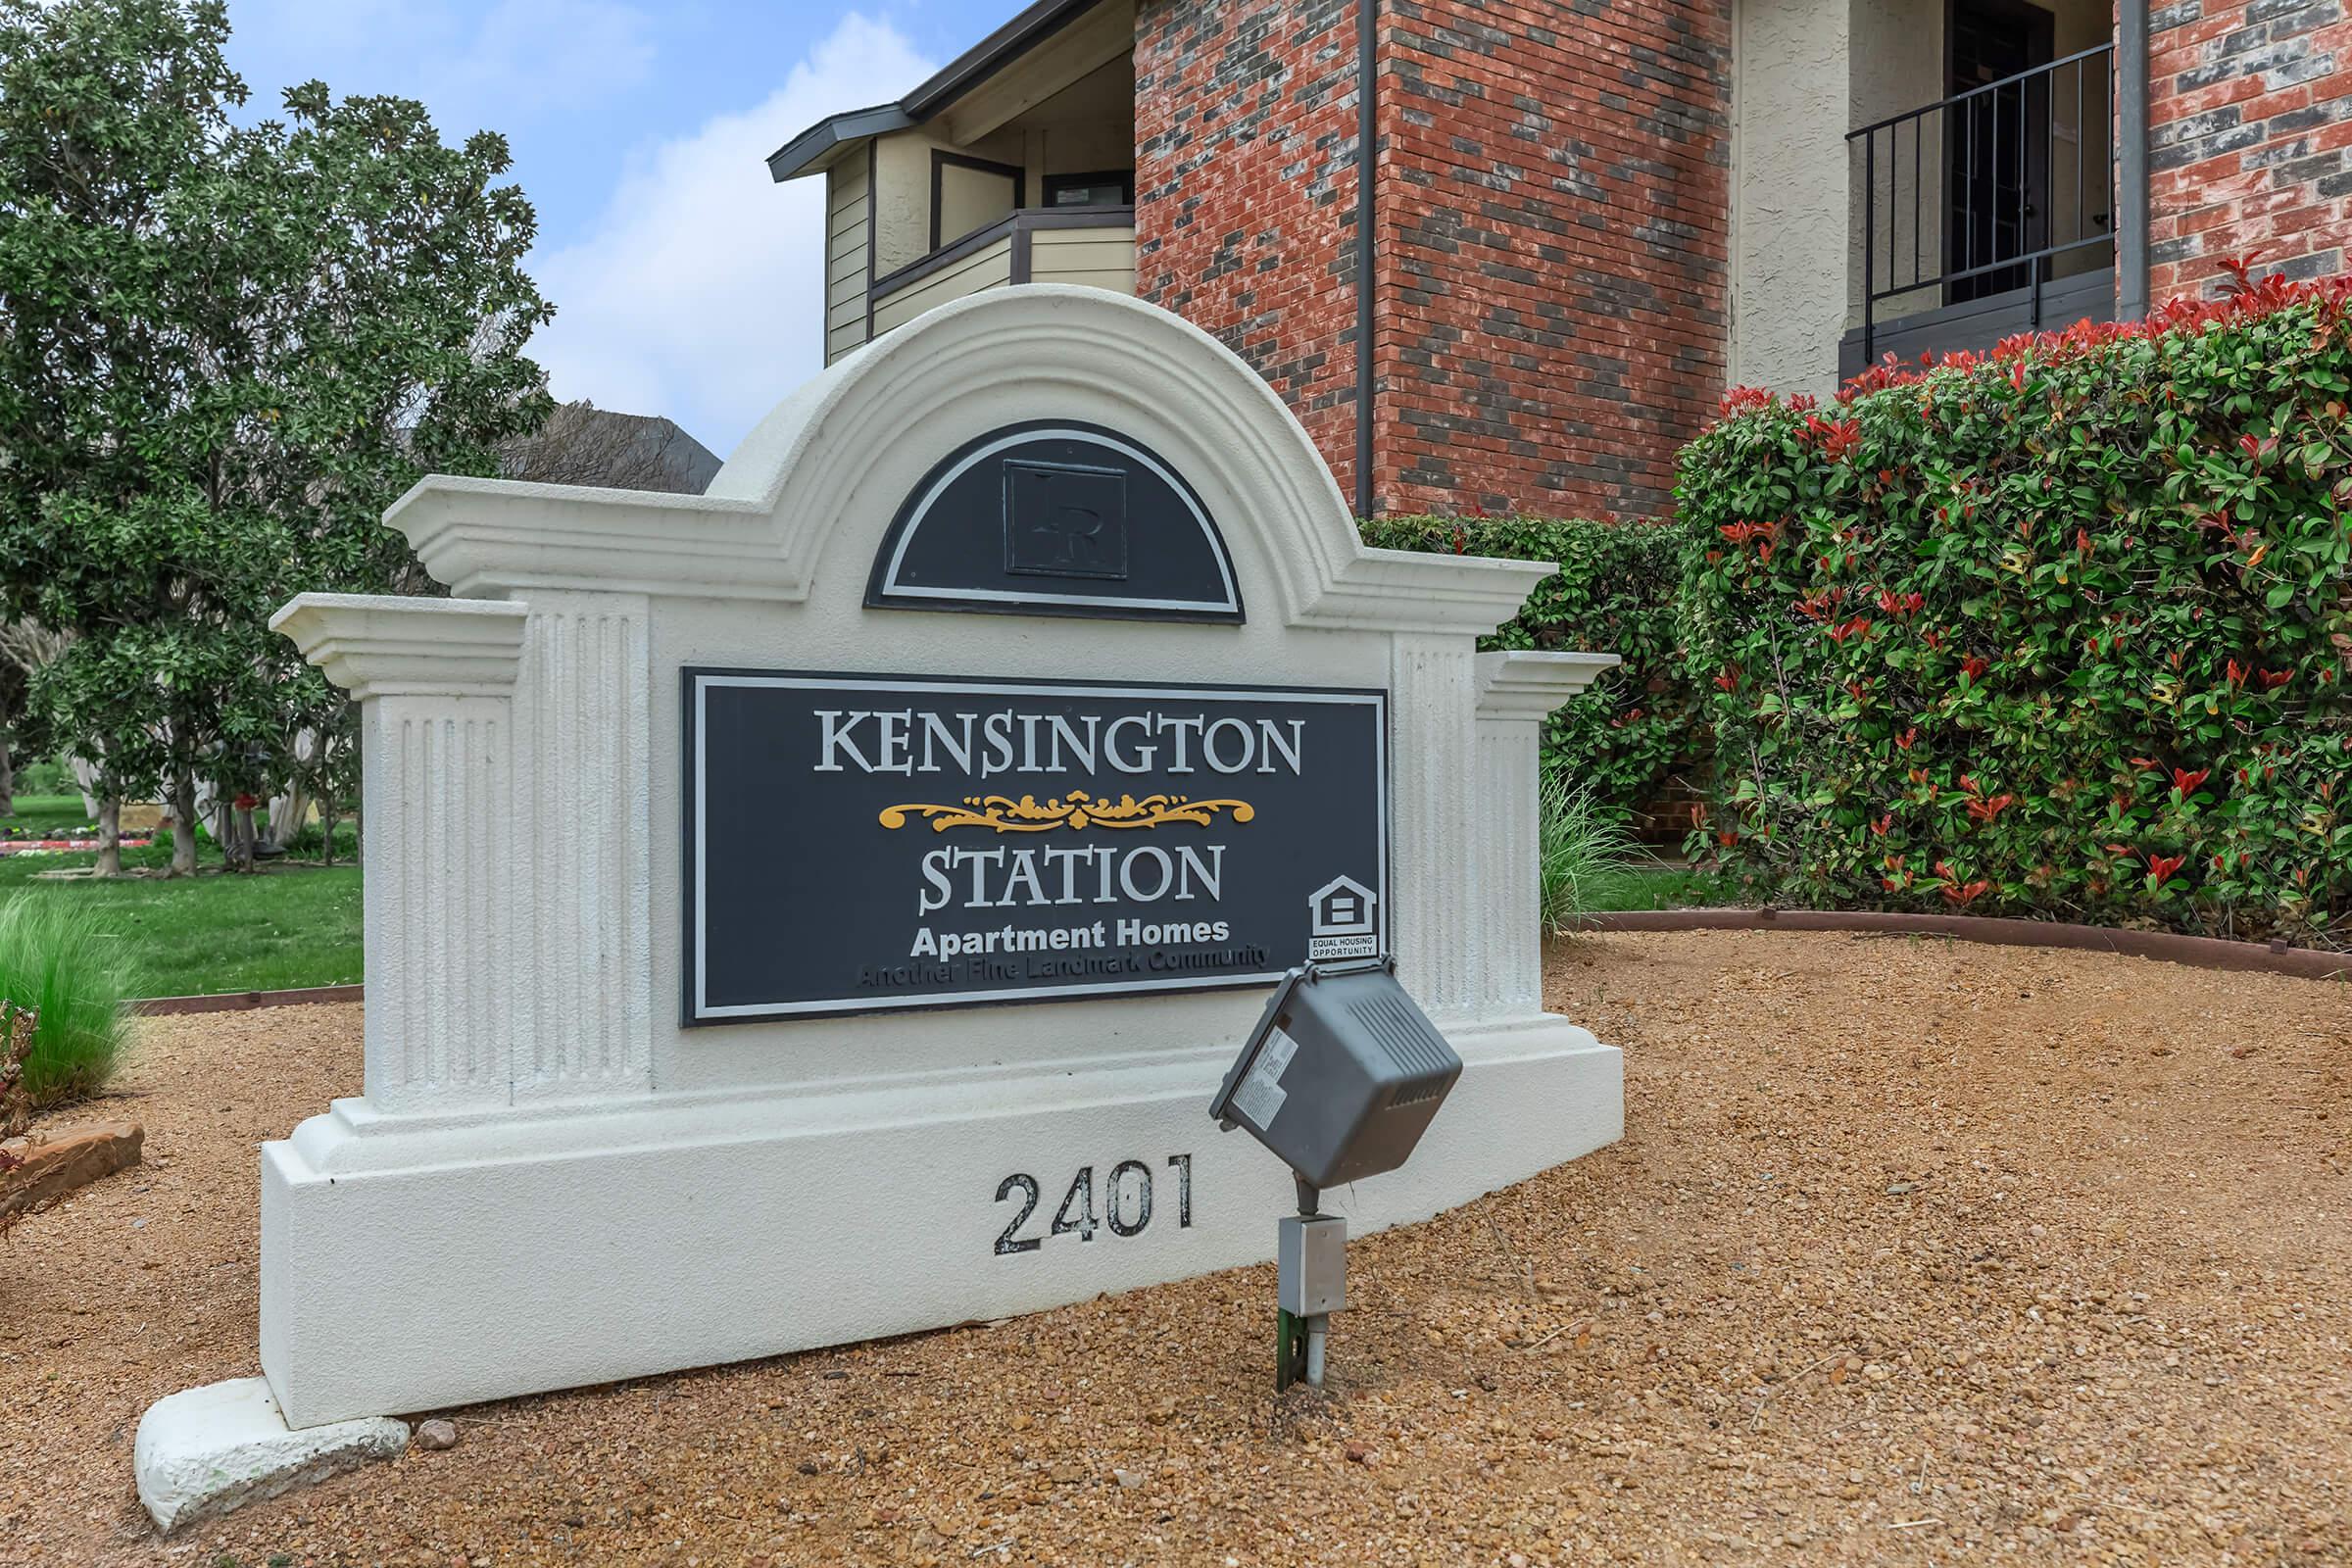 Kensington Station monument sign